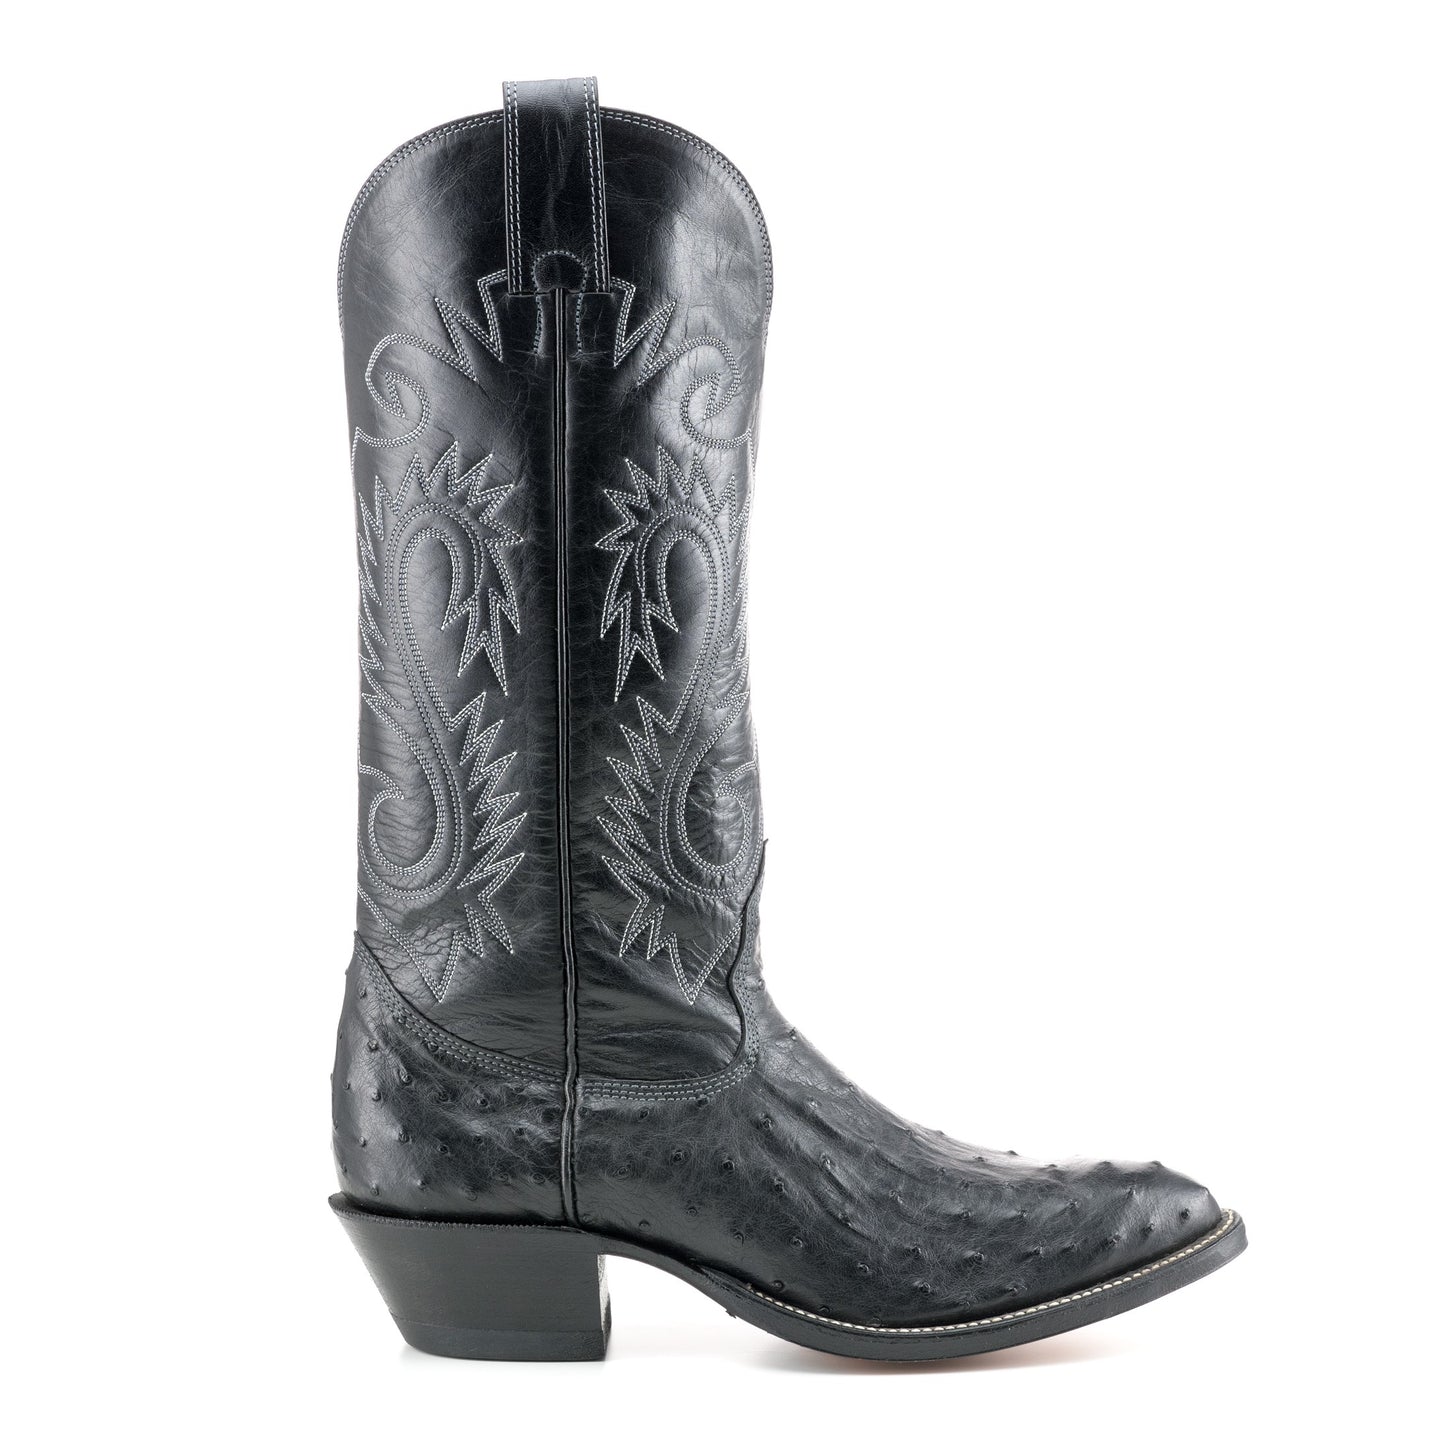 Black custom cowboy boot